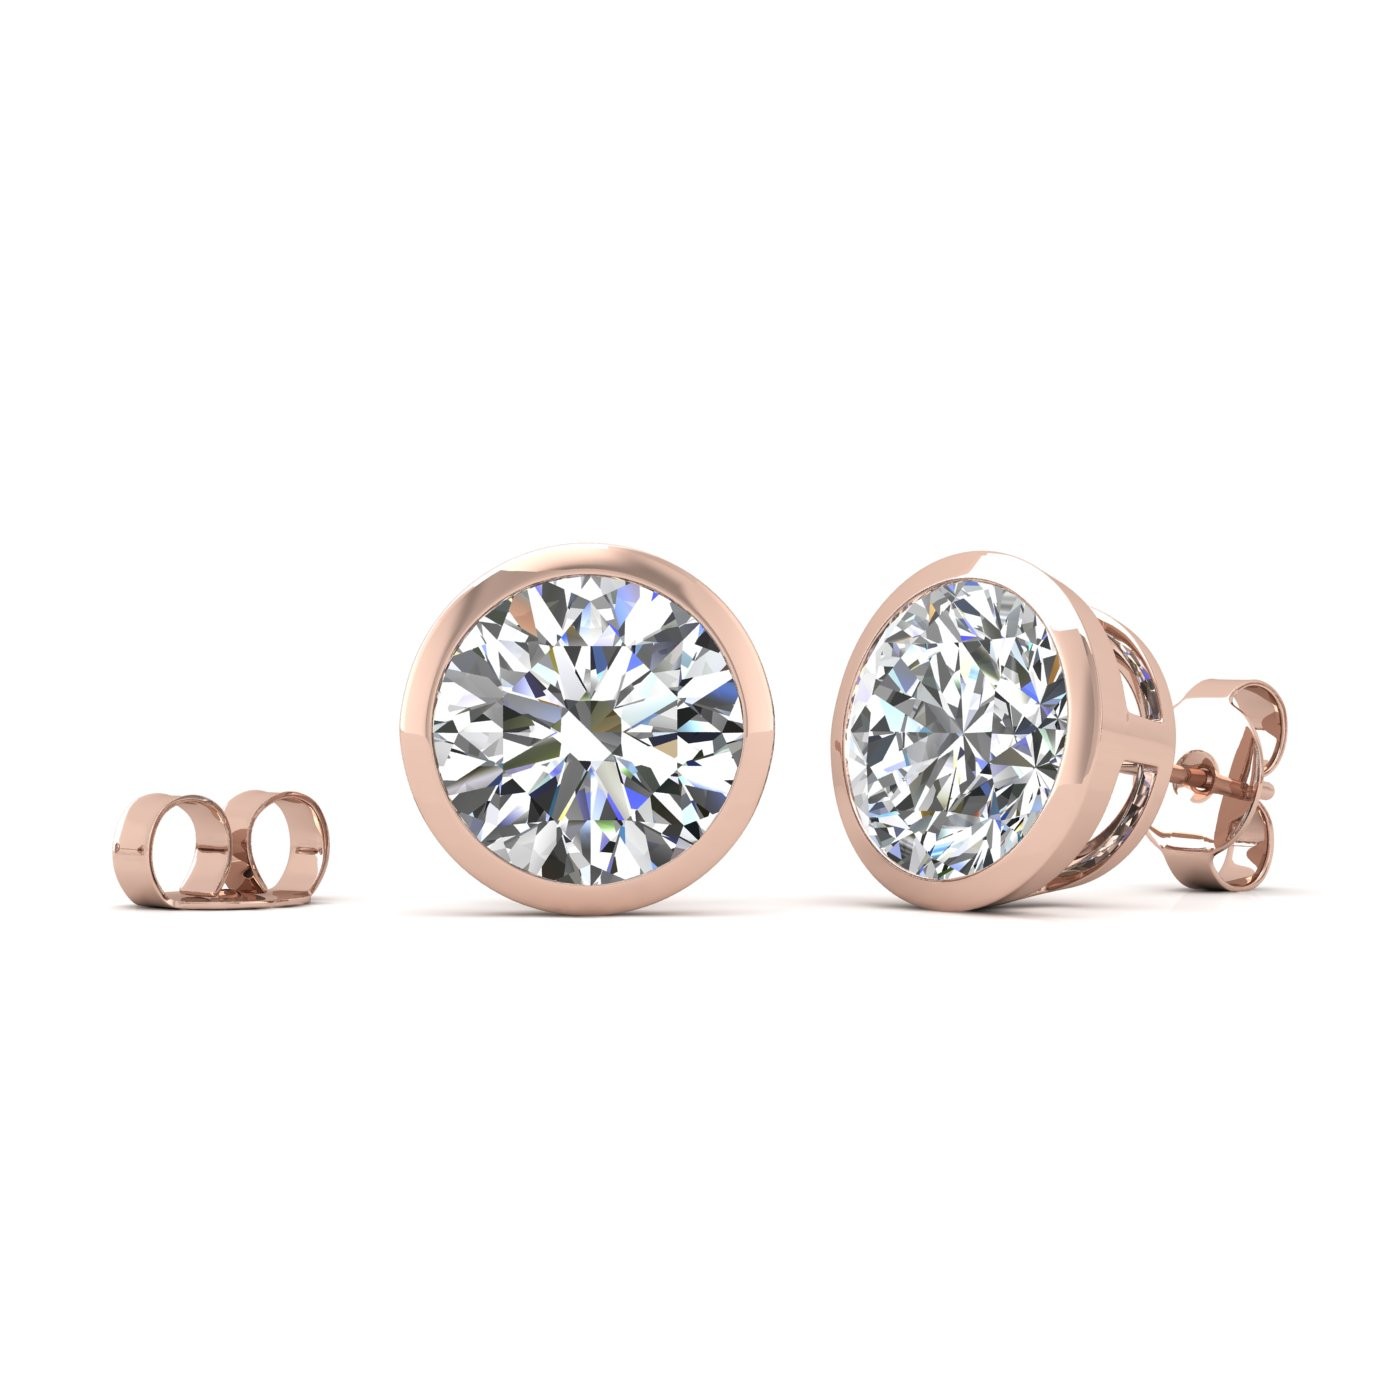 18k rose gold 0,5 ct each (1,0 tcw) round brilliant cut diamond bezel set earring studs Photos & images